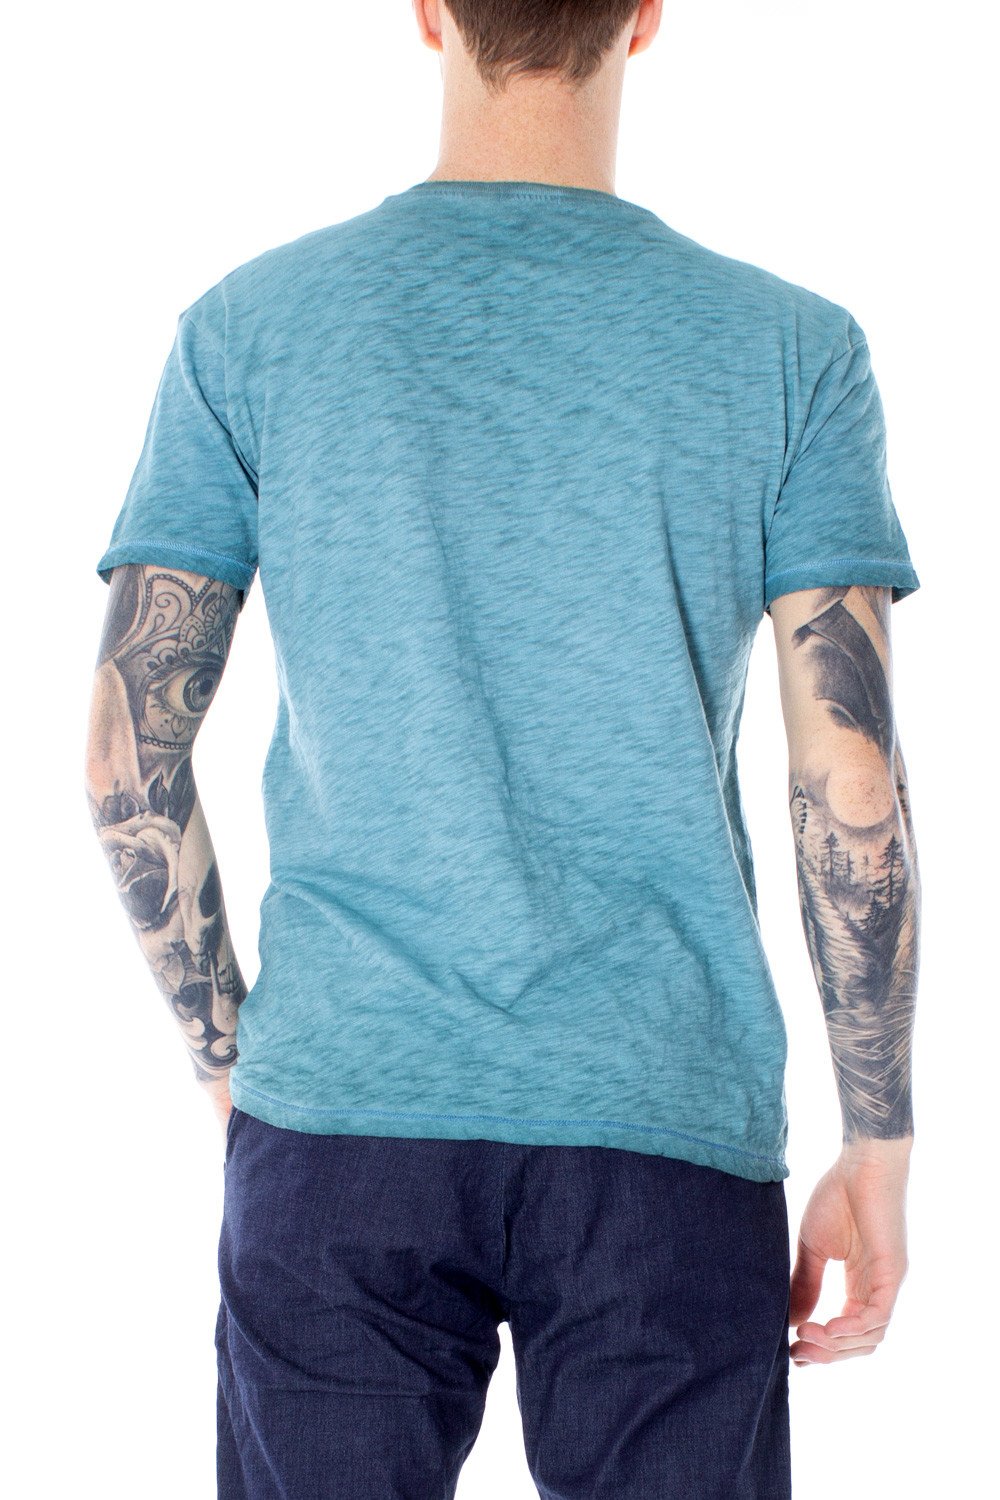 hydra clothing Hydra Clothing T-Shirt Uomo